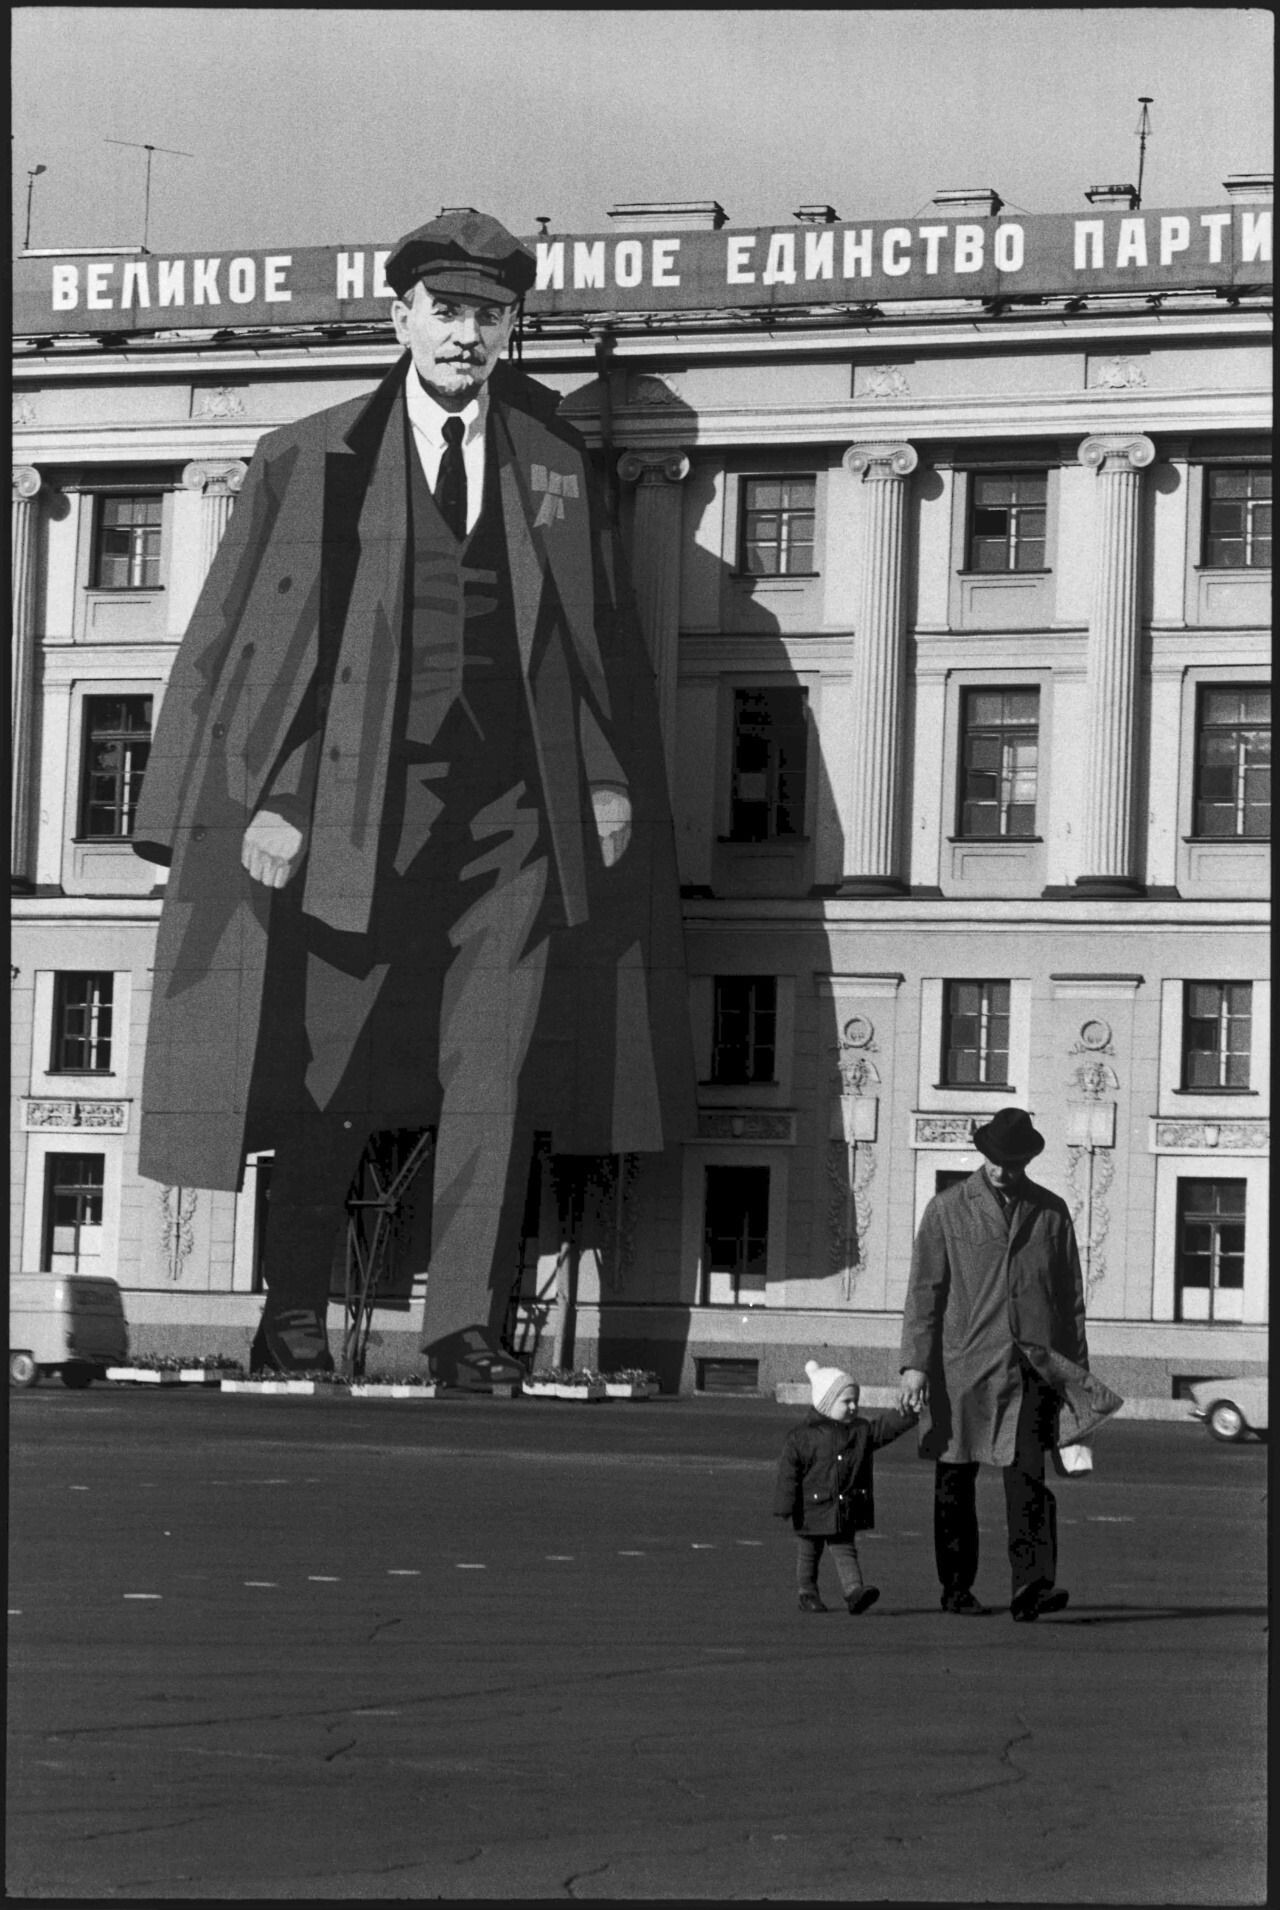 Ленинград, 1973. Фотограф Анри Картье-Брессон